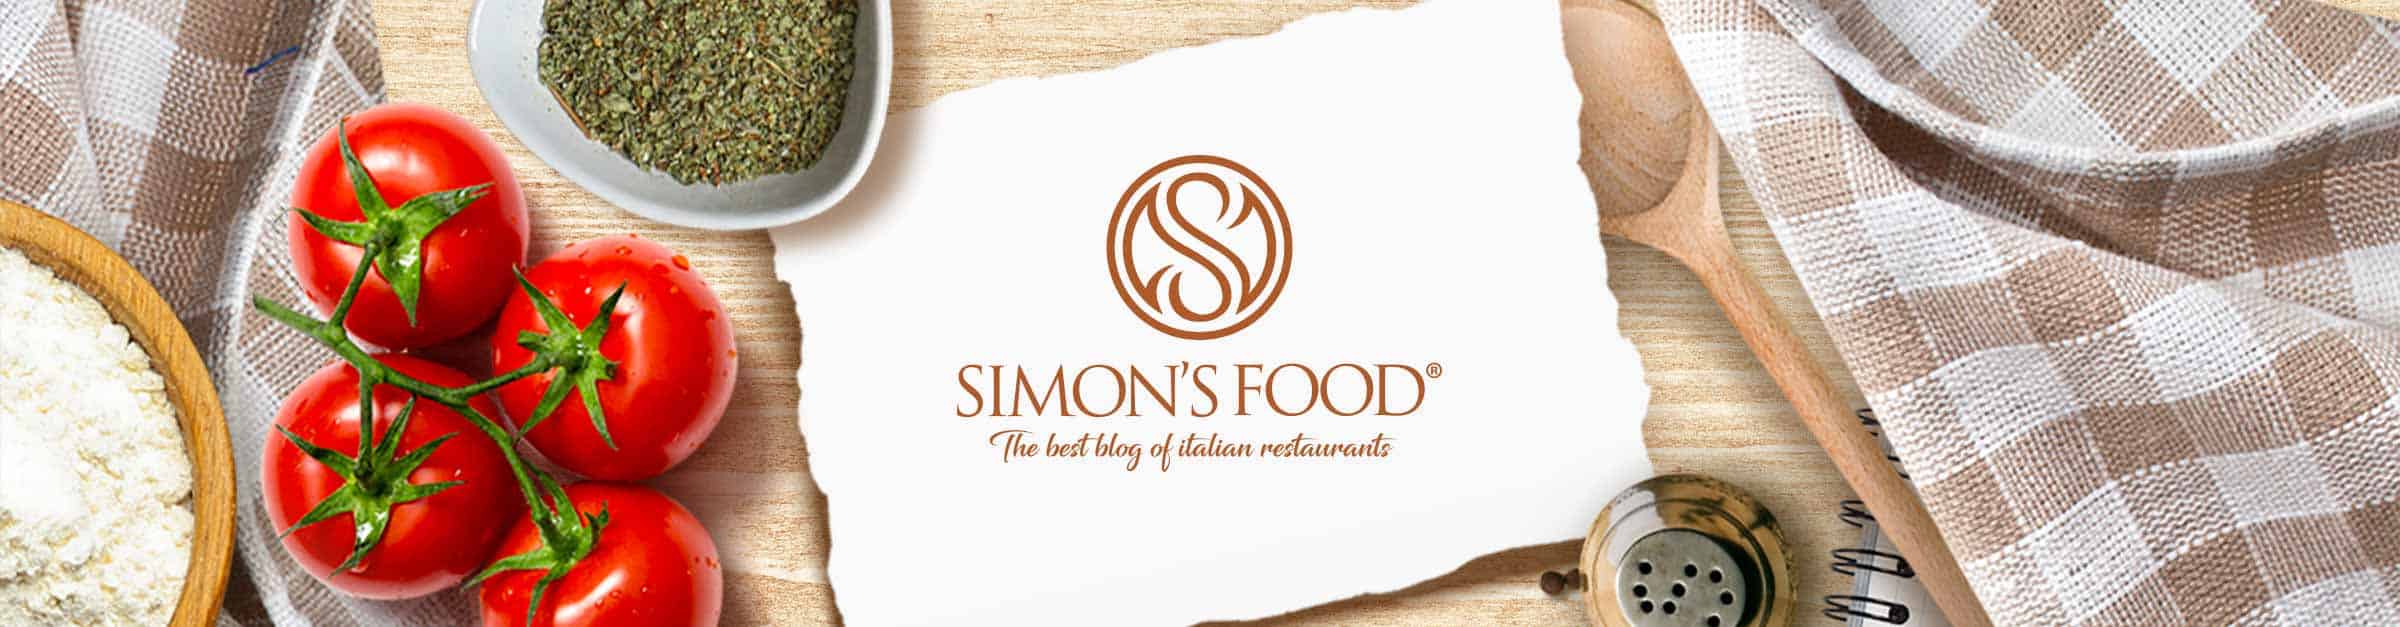 Simon Italian Food, logo